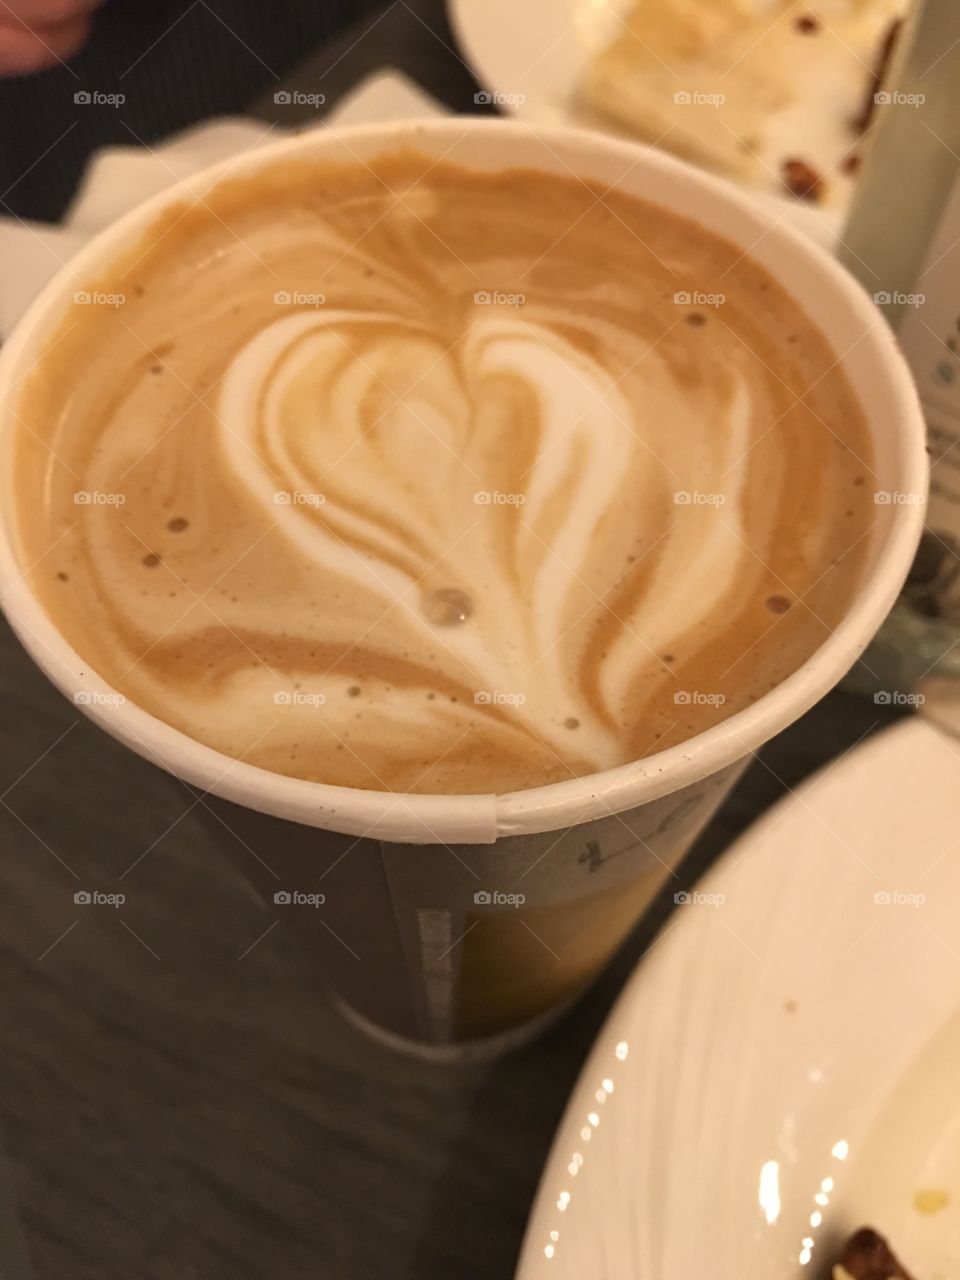 I heart coffee 